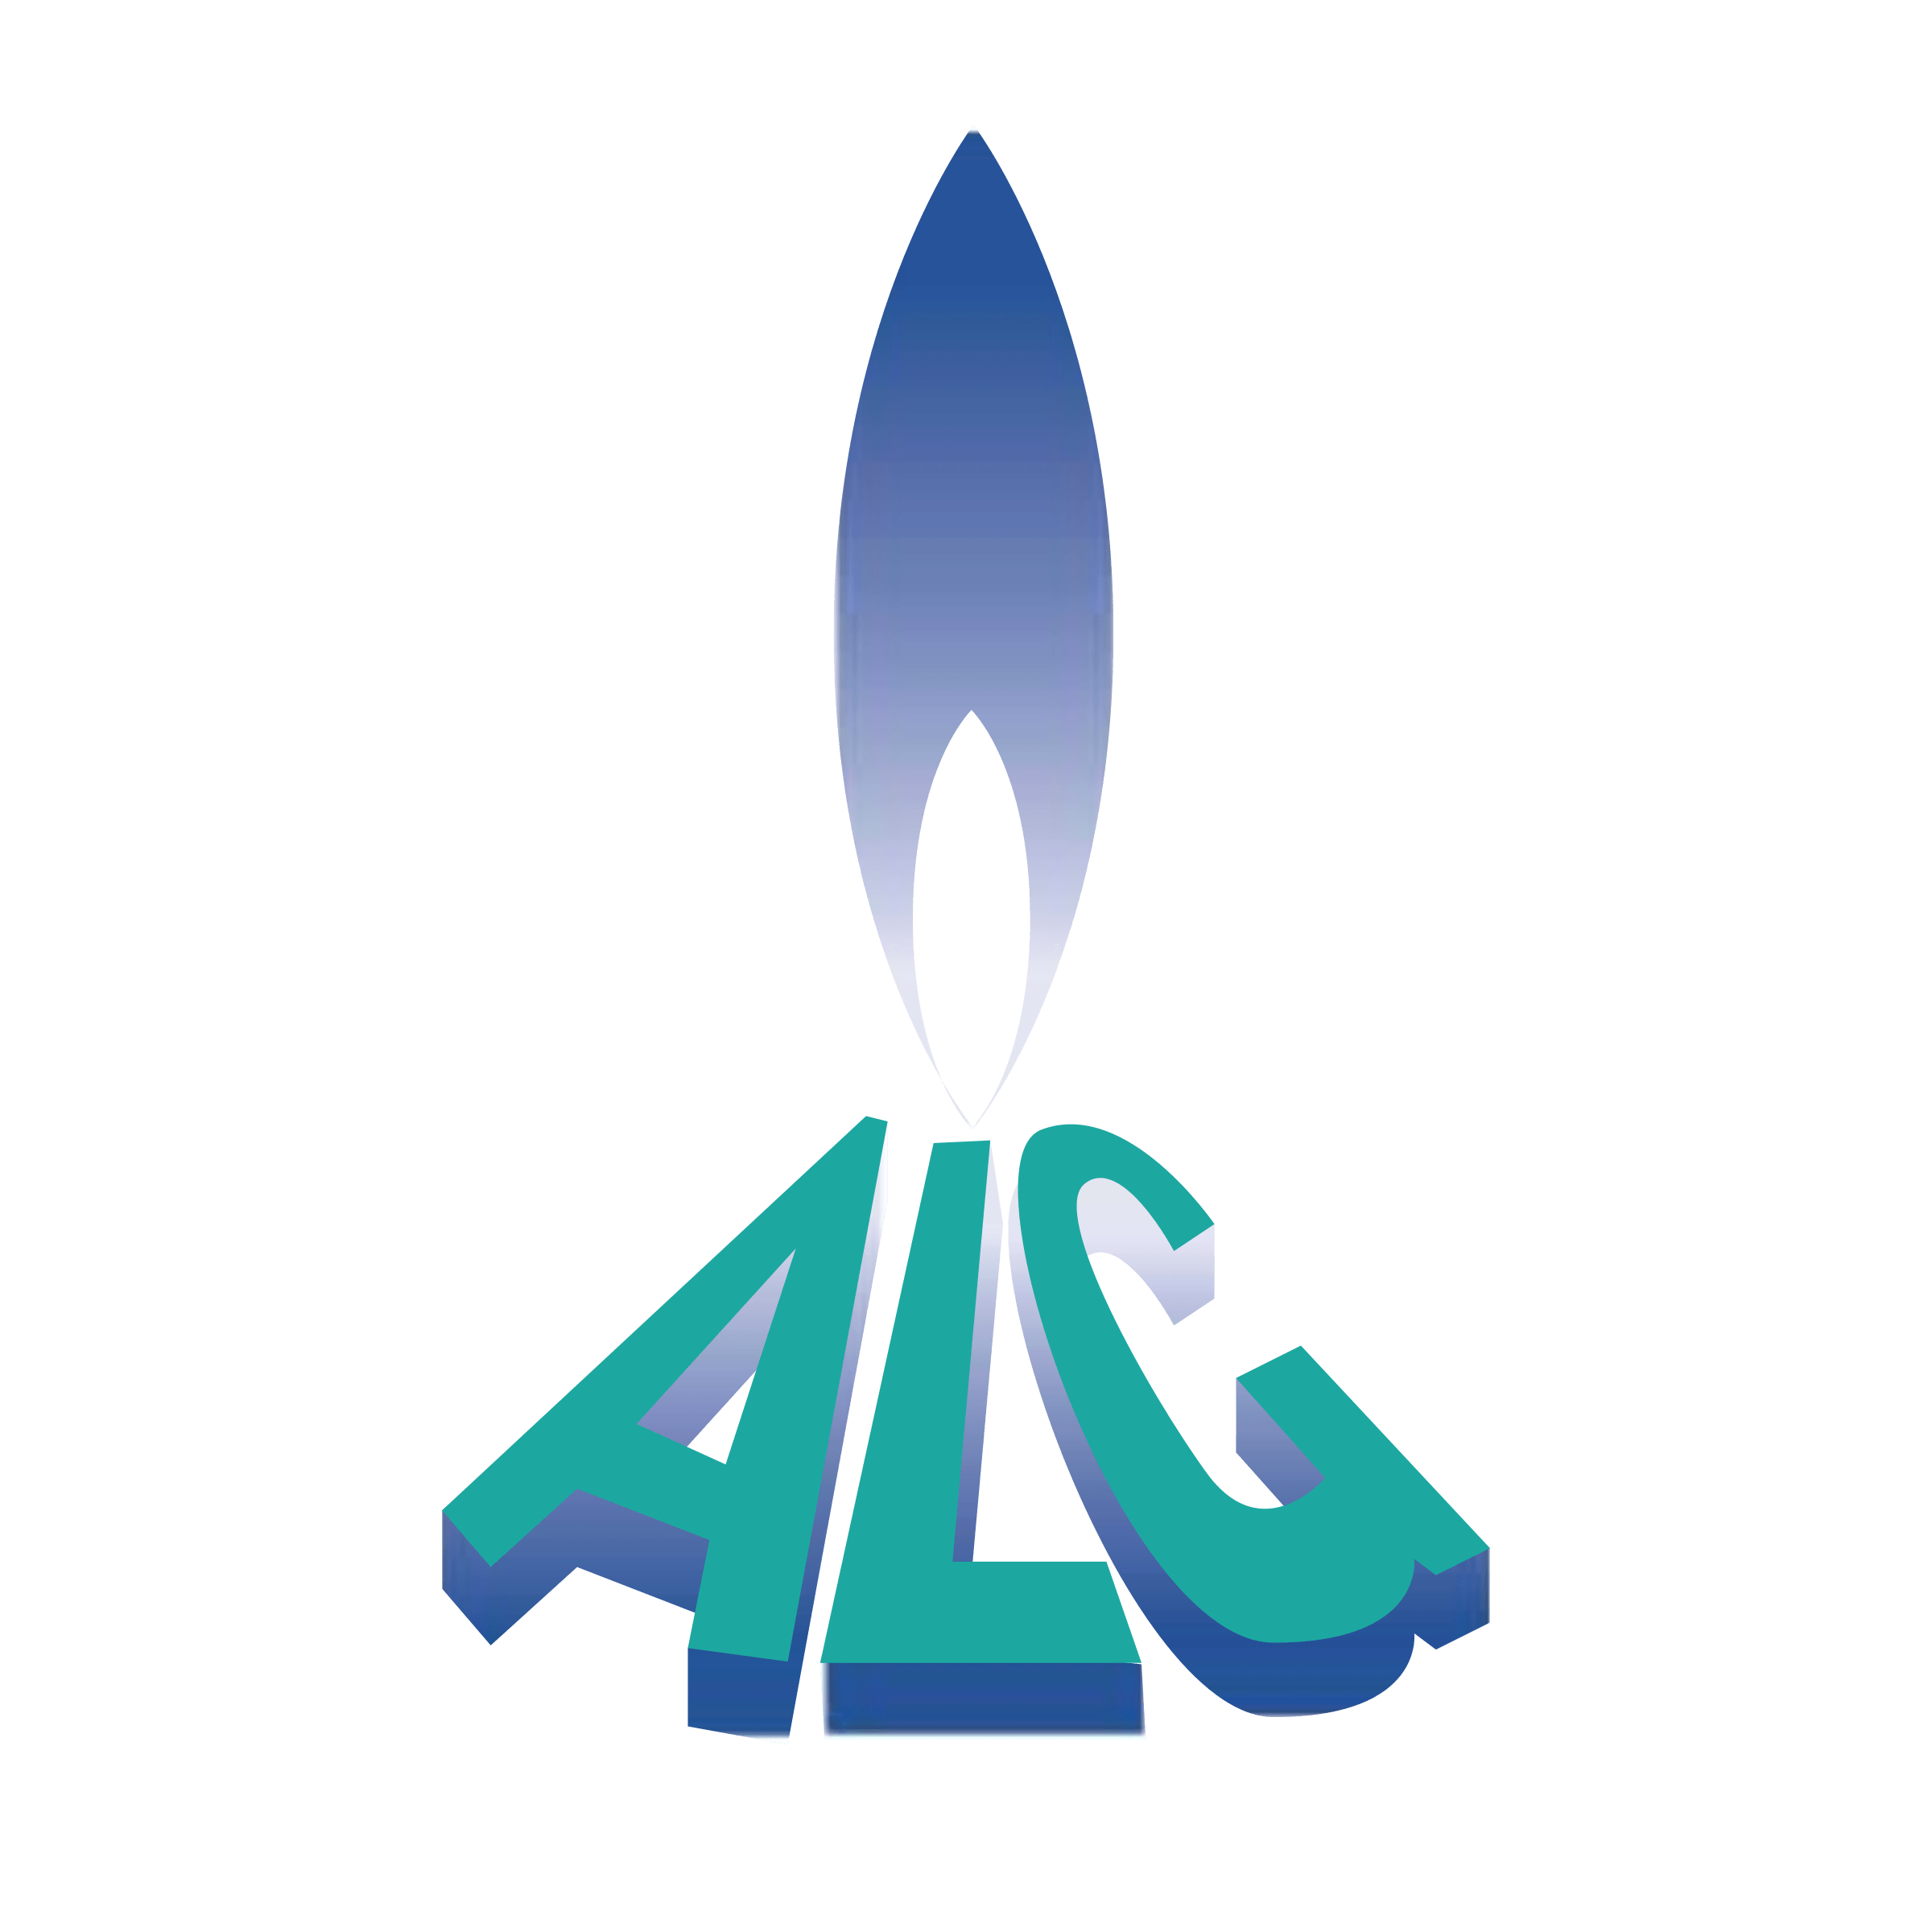 Alg Logo - ALG Logo PNG Transparent & SVG Vector - Freebie Supply